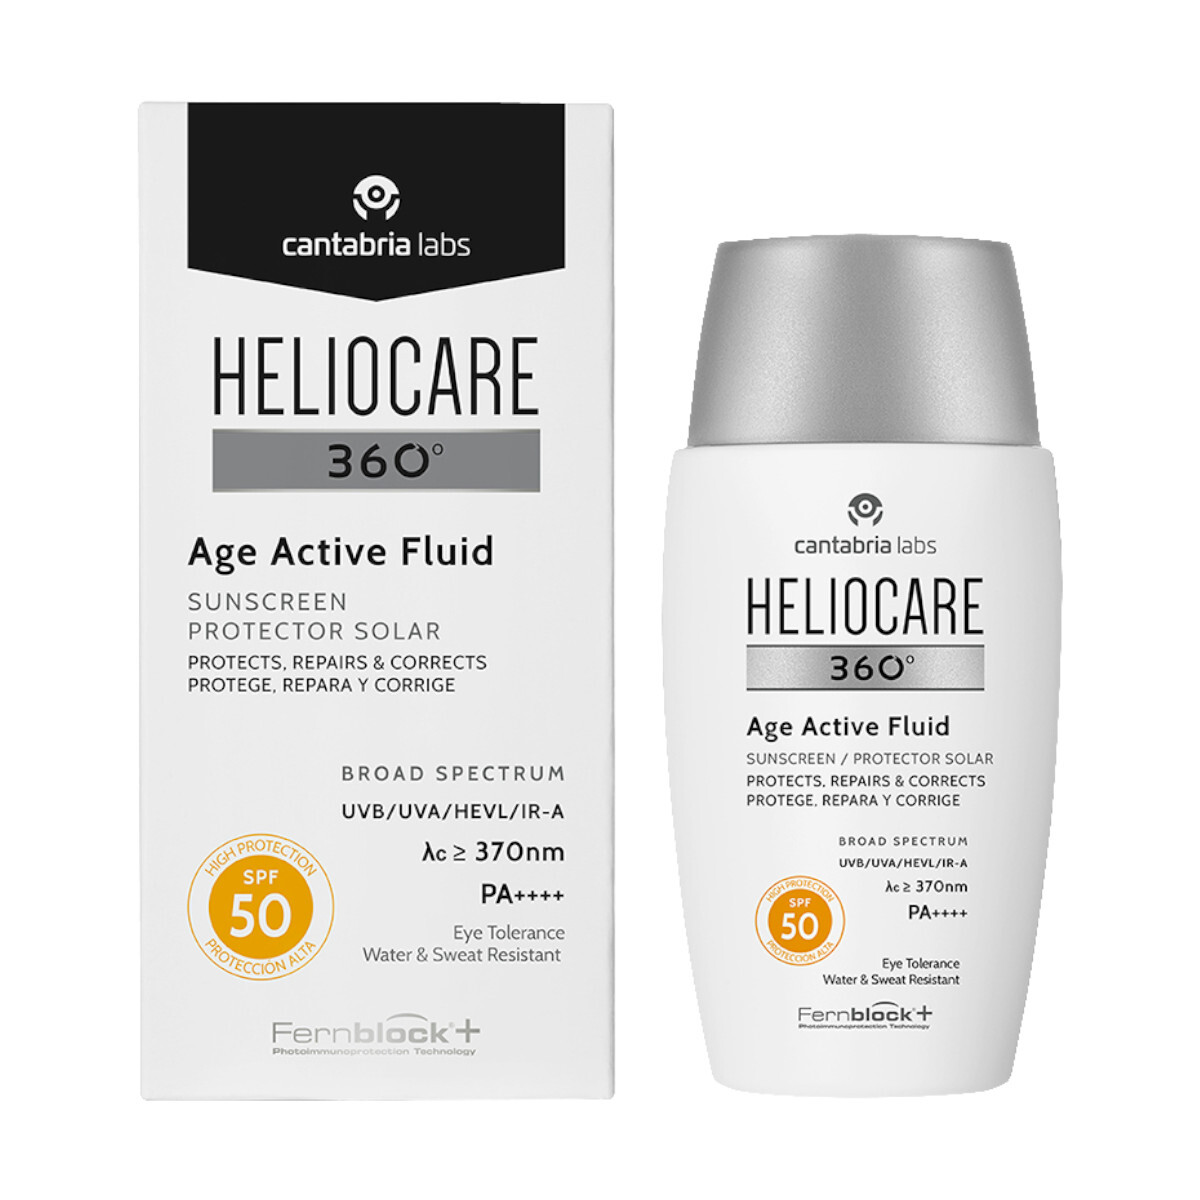 HELIOCARE, 360° Age Active fluid SPF 50